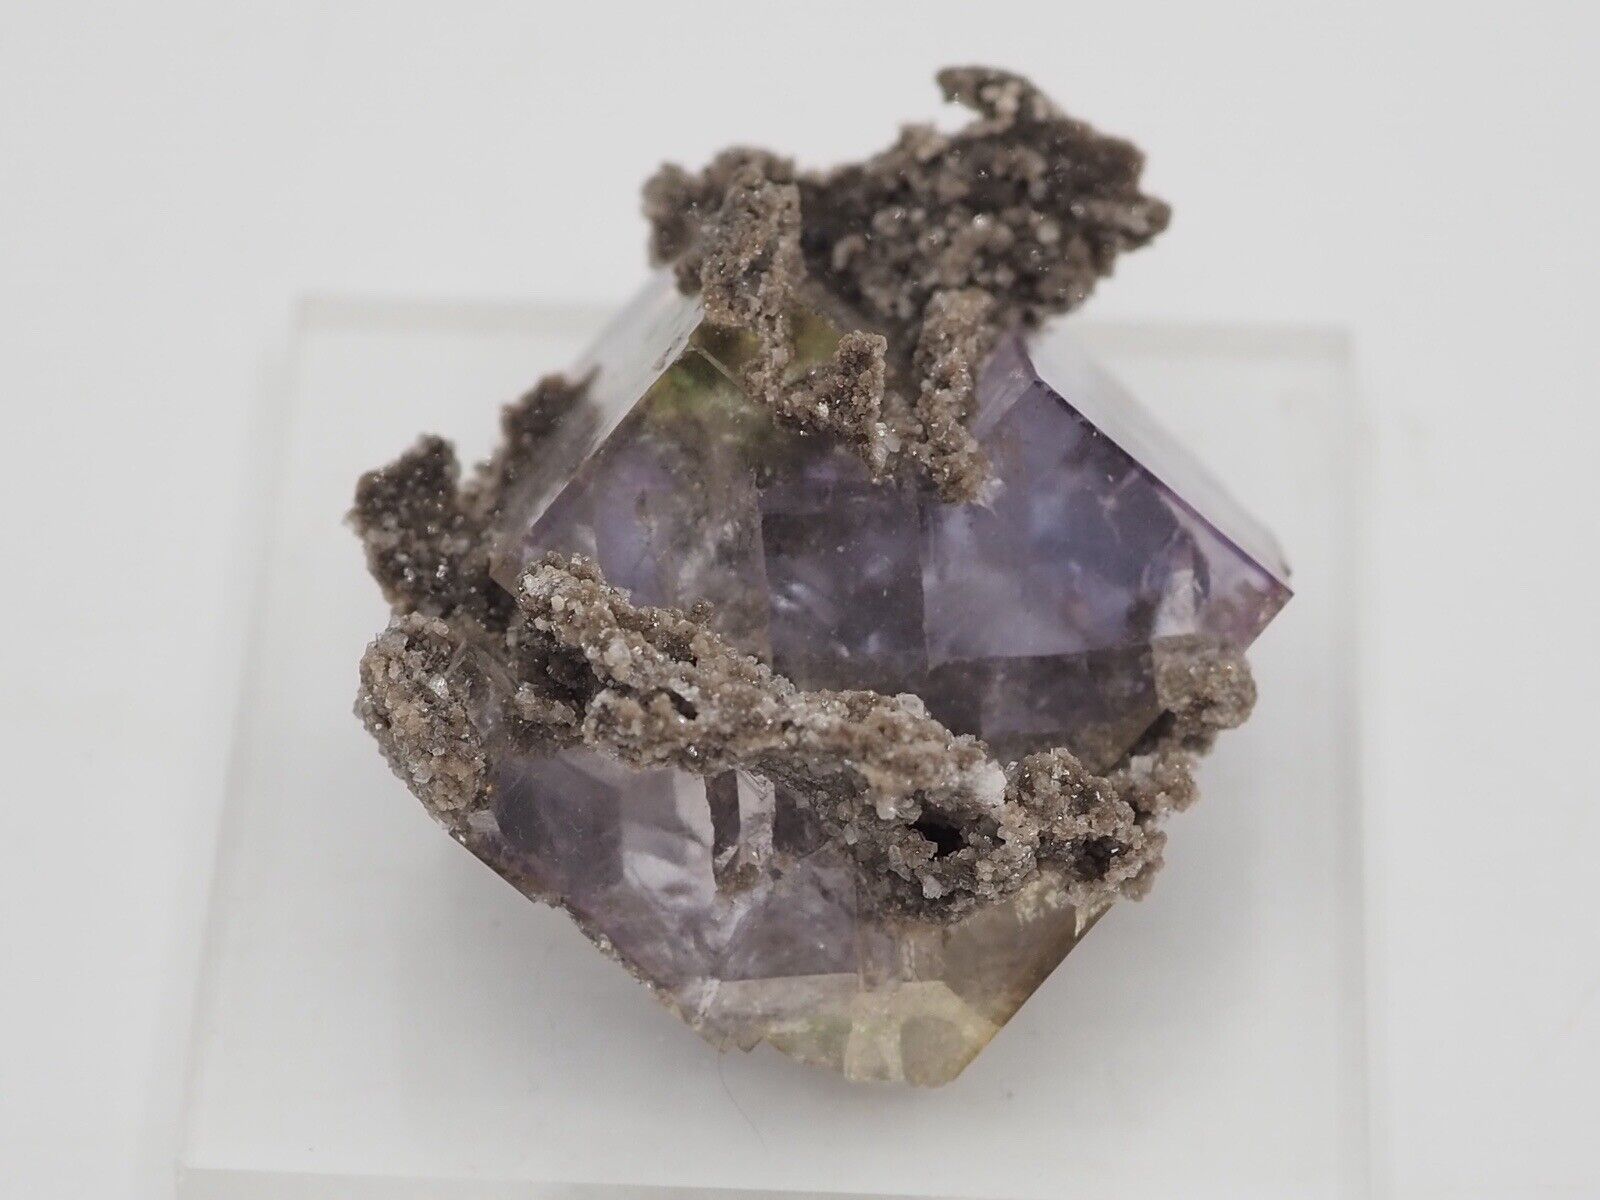 Fluorite on Dolomite Crystal PENFIELD QUARRY, NEW YORK - Ex. bob hiler